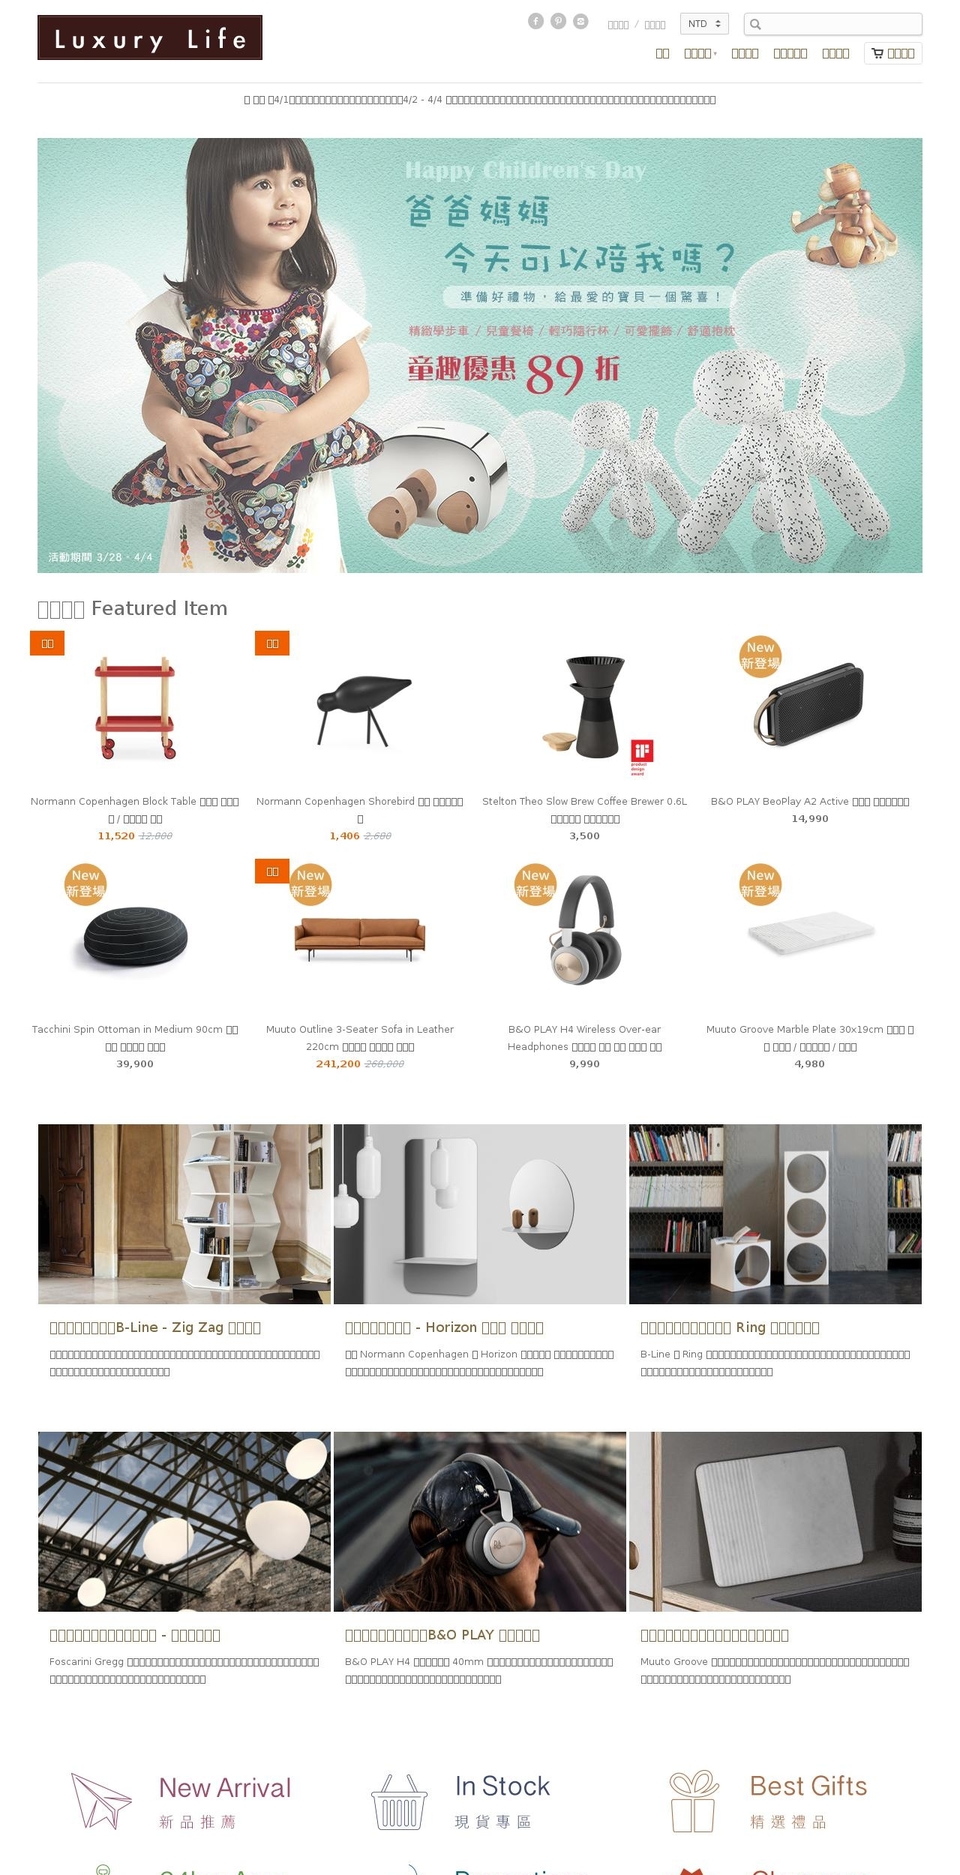 luxurylife.com.tw shopify website screenshot